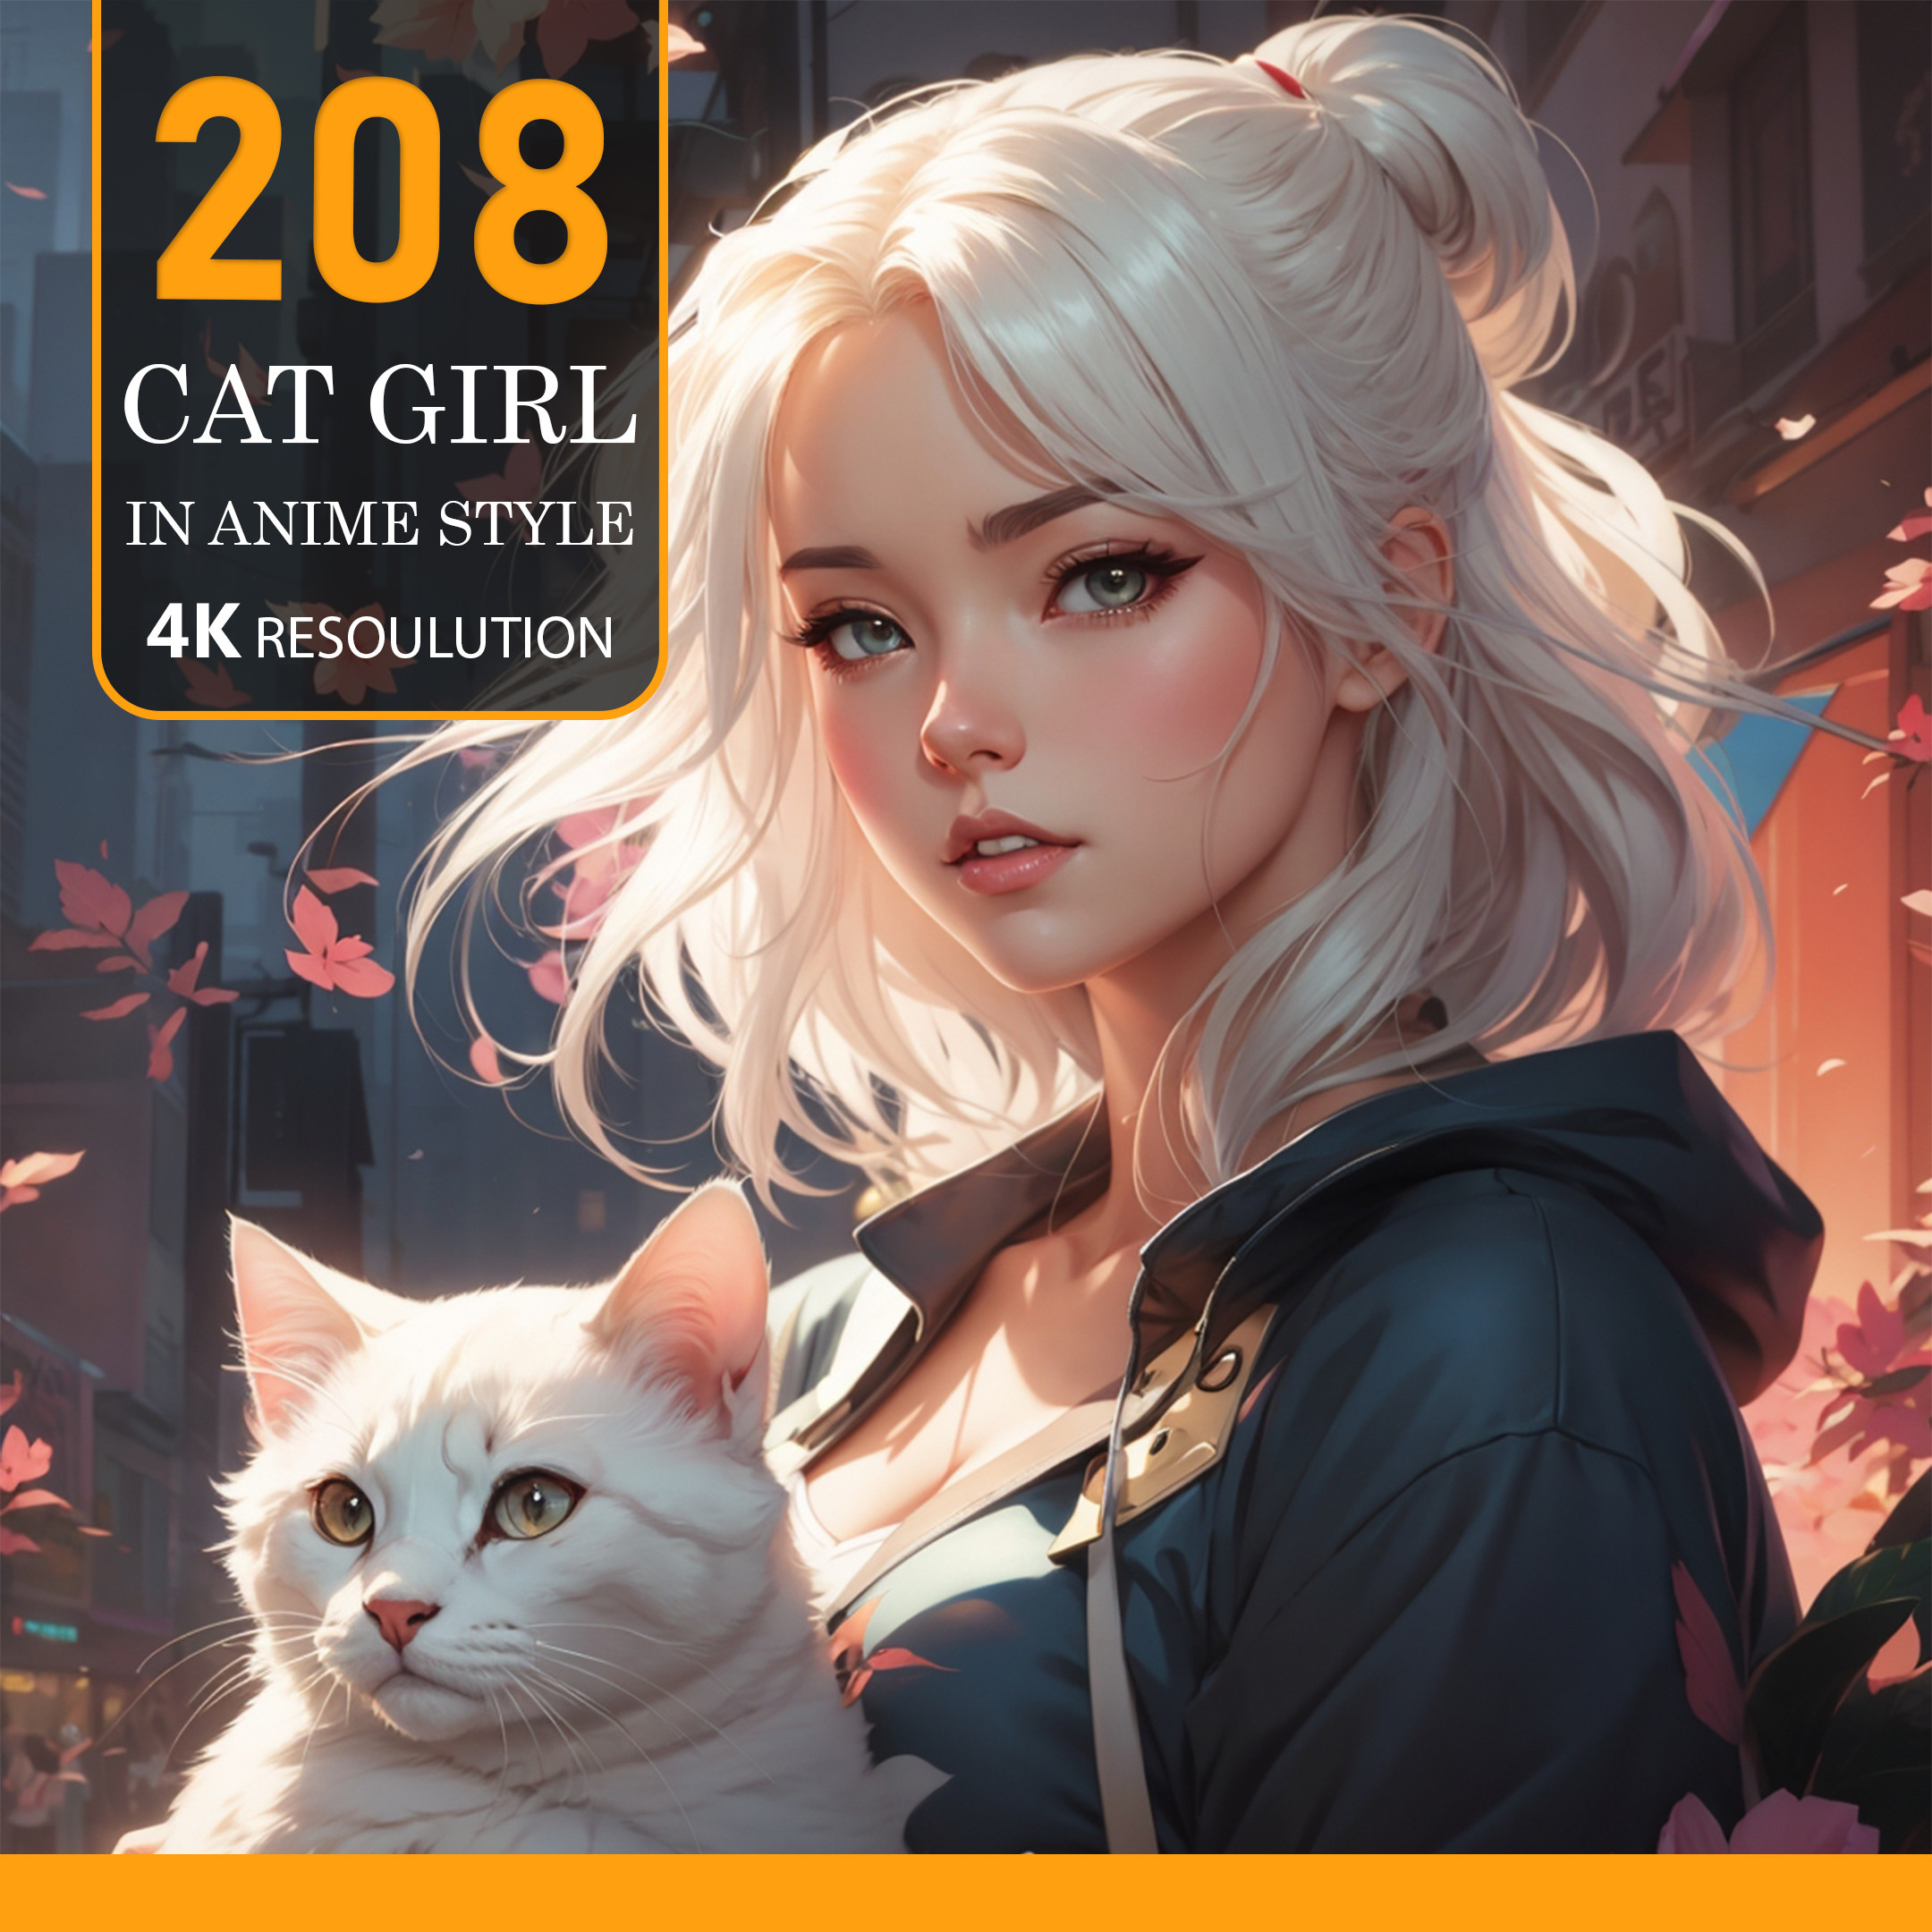 ArtStation - Catgirls In Anime Style Vol.18-4K, Anime Character References  Pack